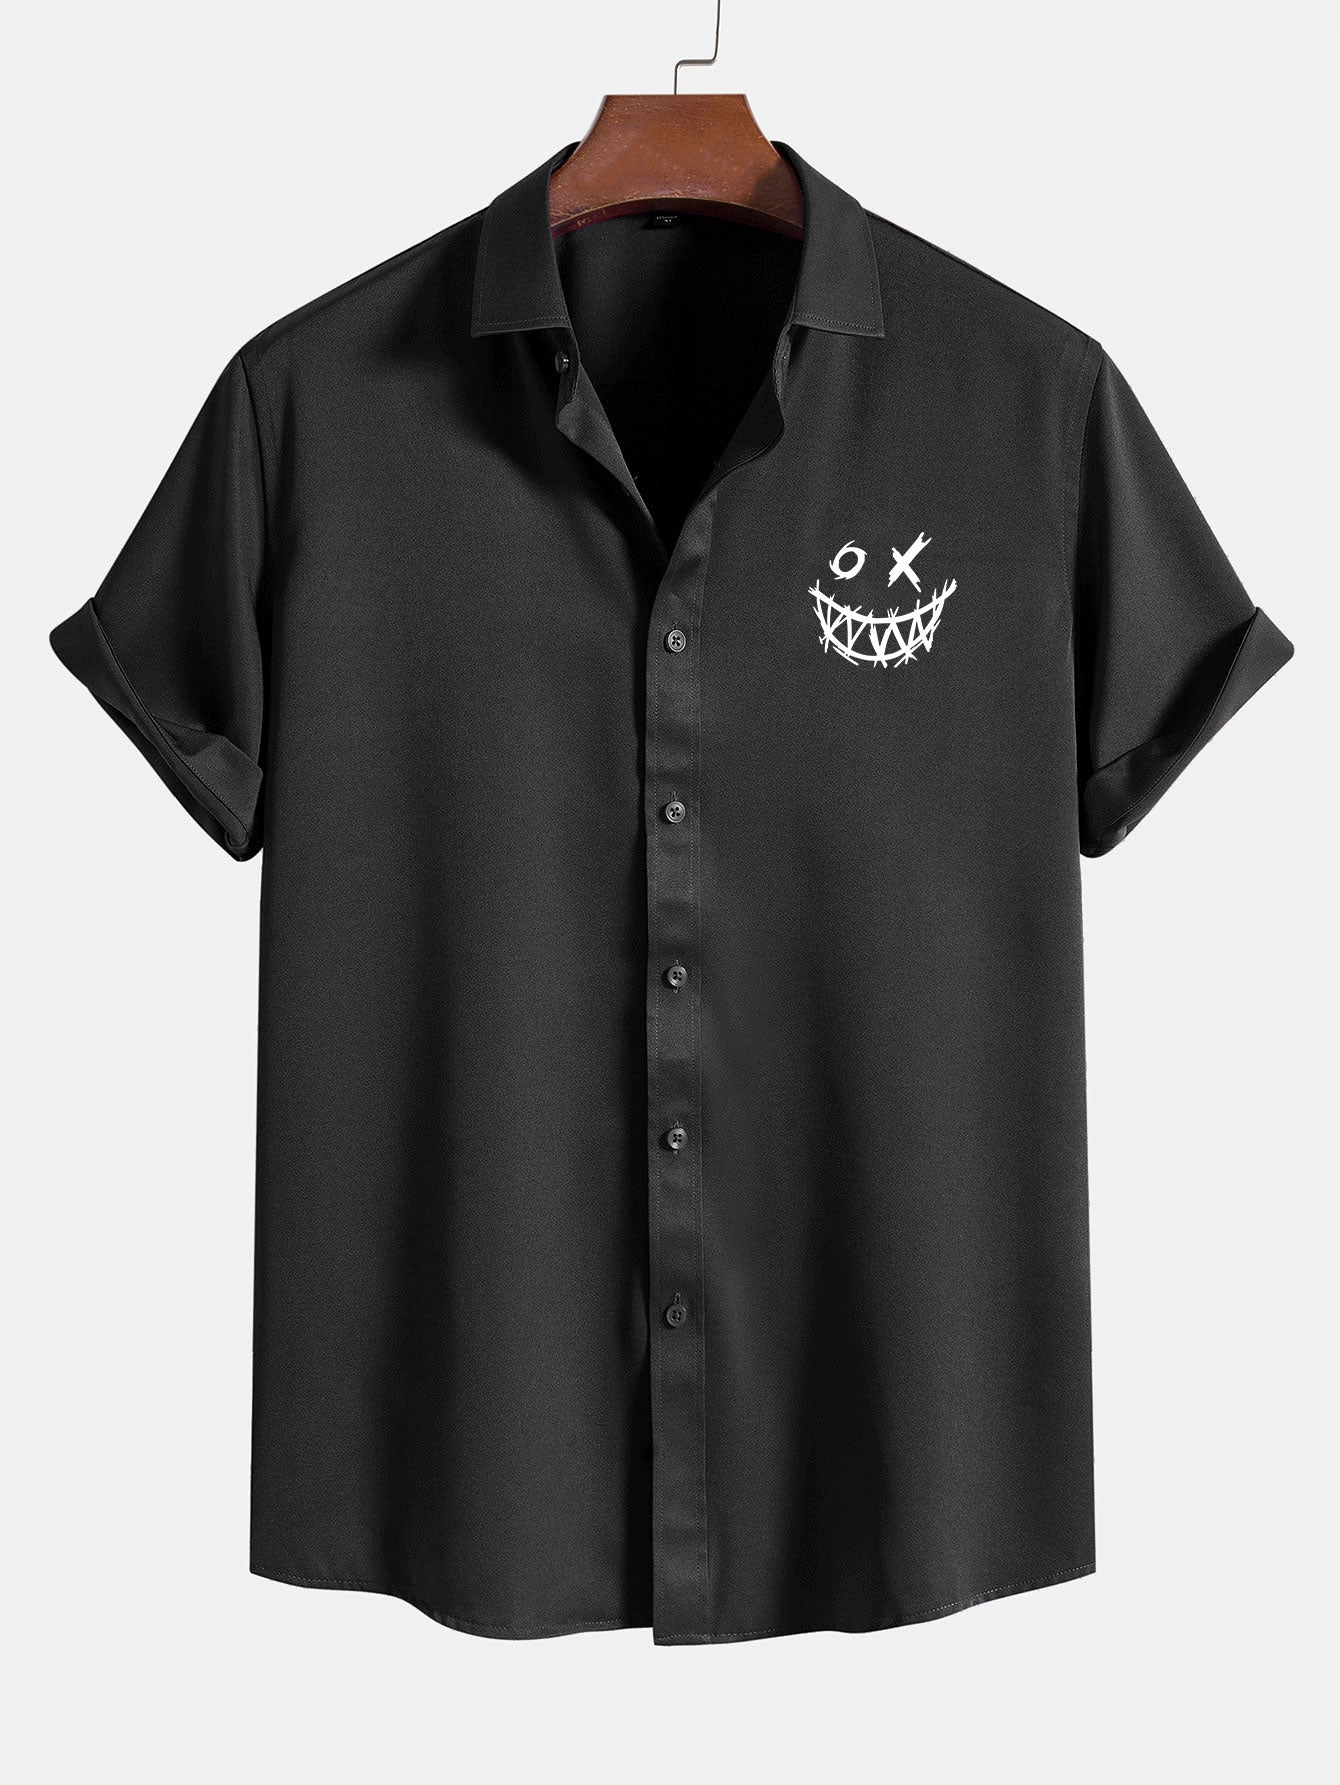 Grimace Print Button Up Shirt